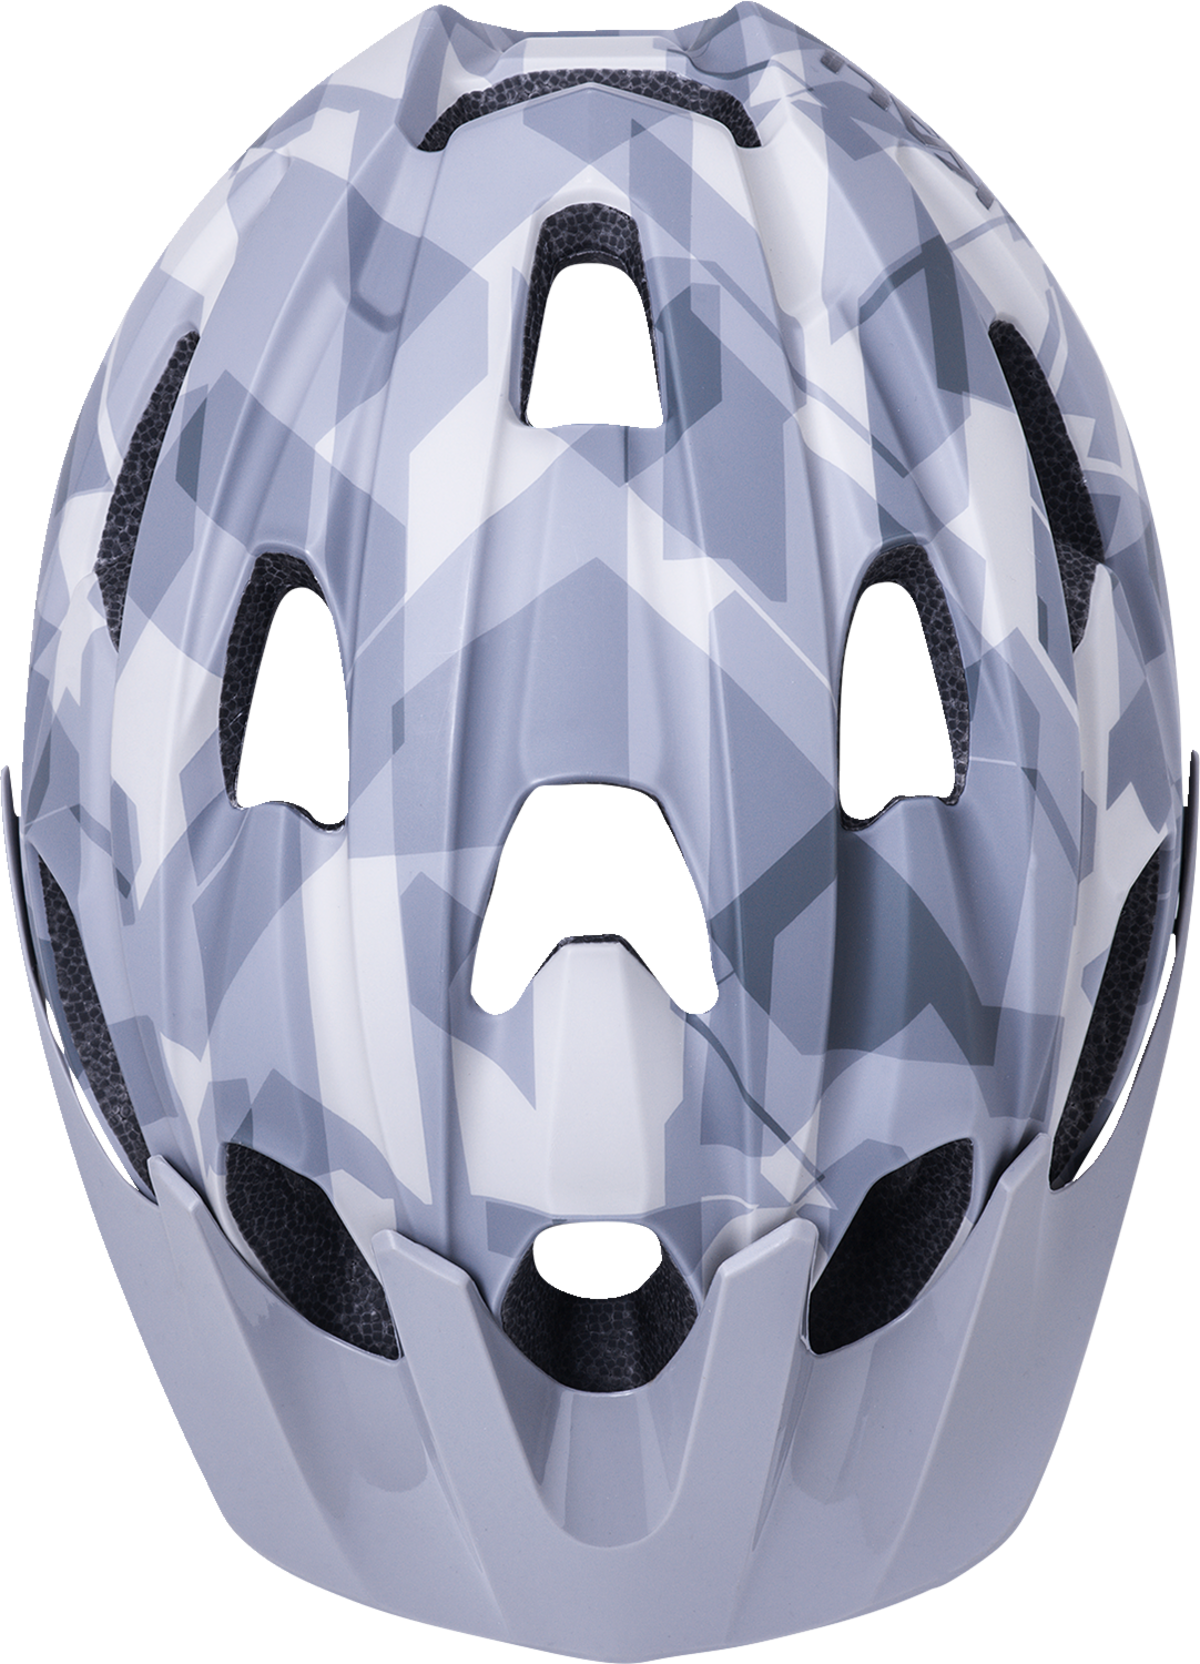 KALI Pace Helmet - Camo - Matte Gray - S/M 0221721216